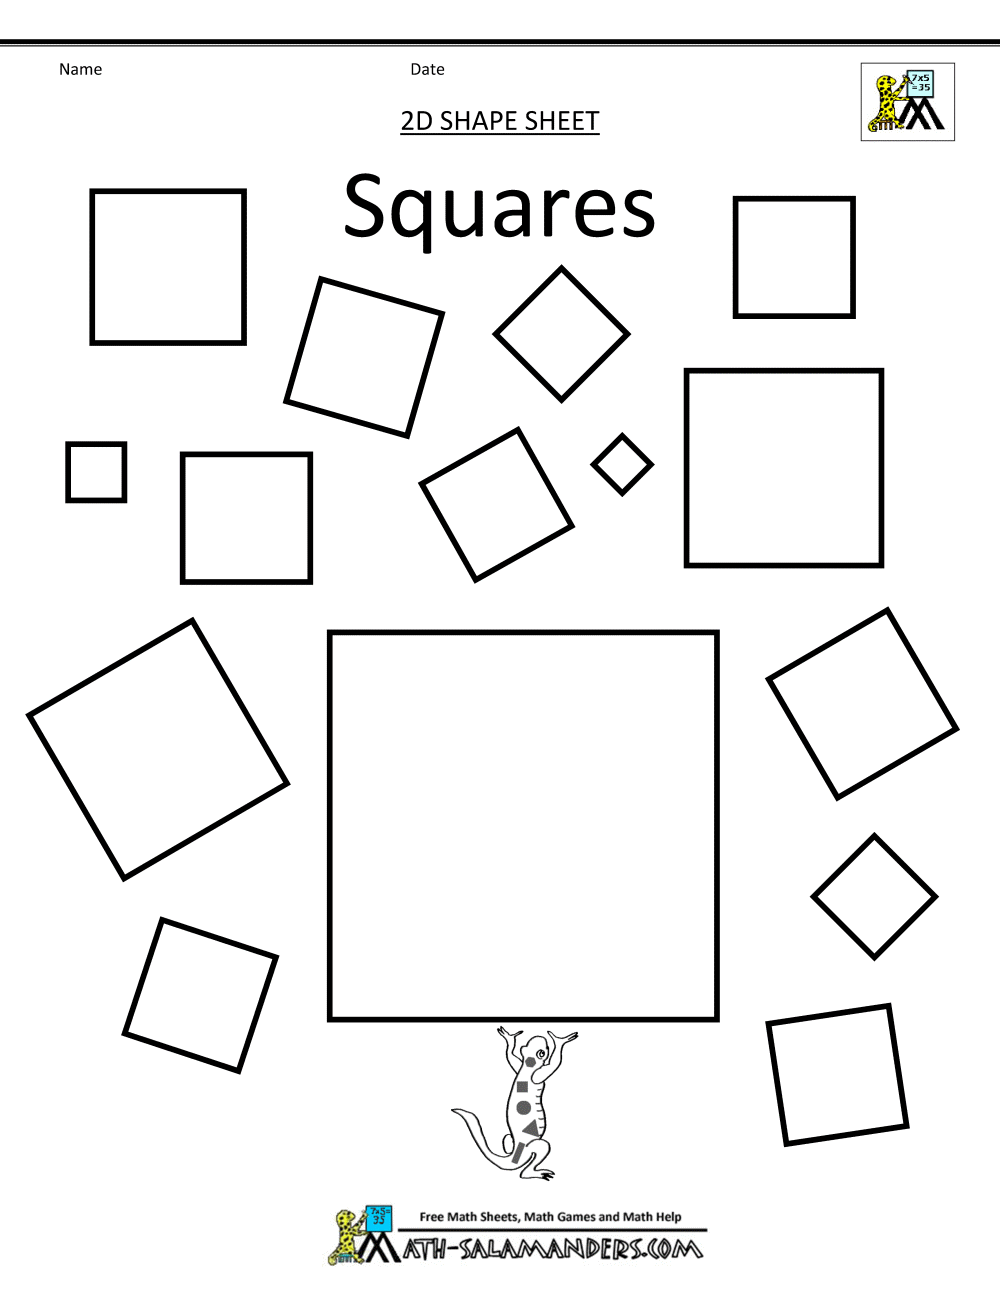 5+ Square Worksheets